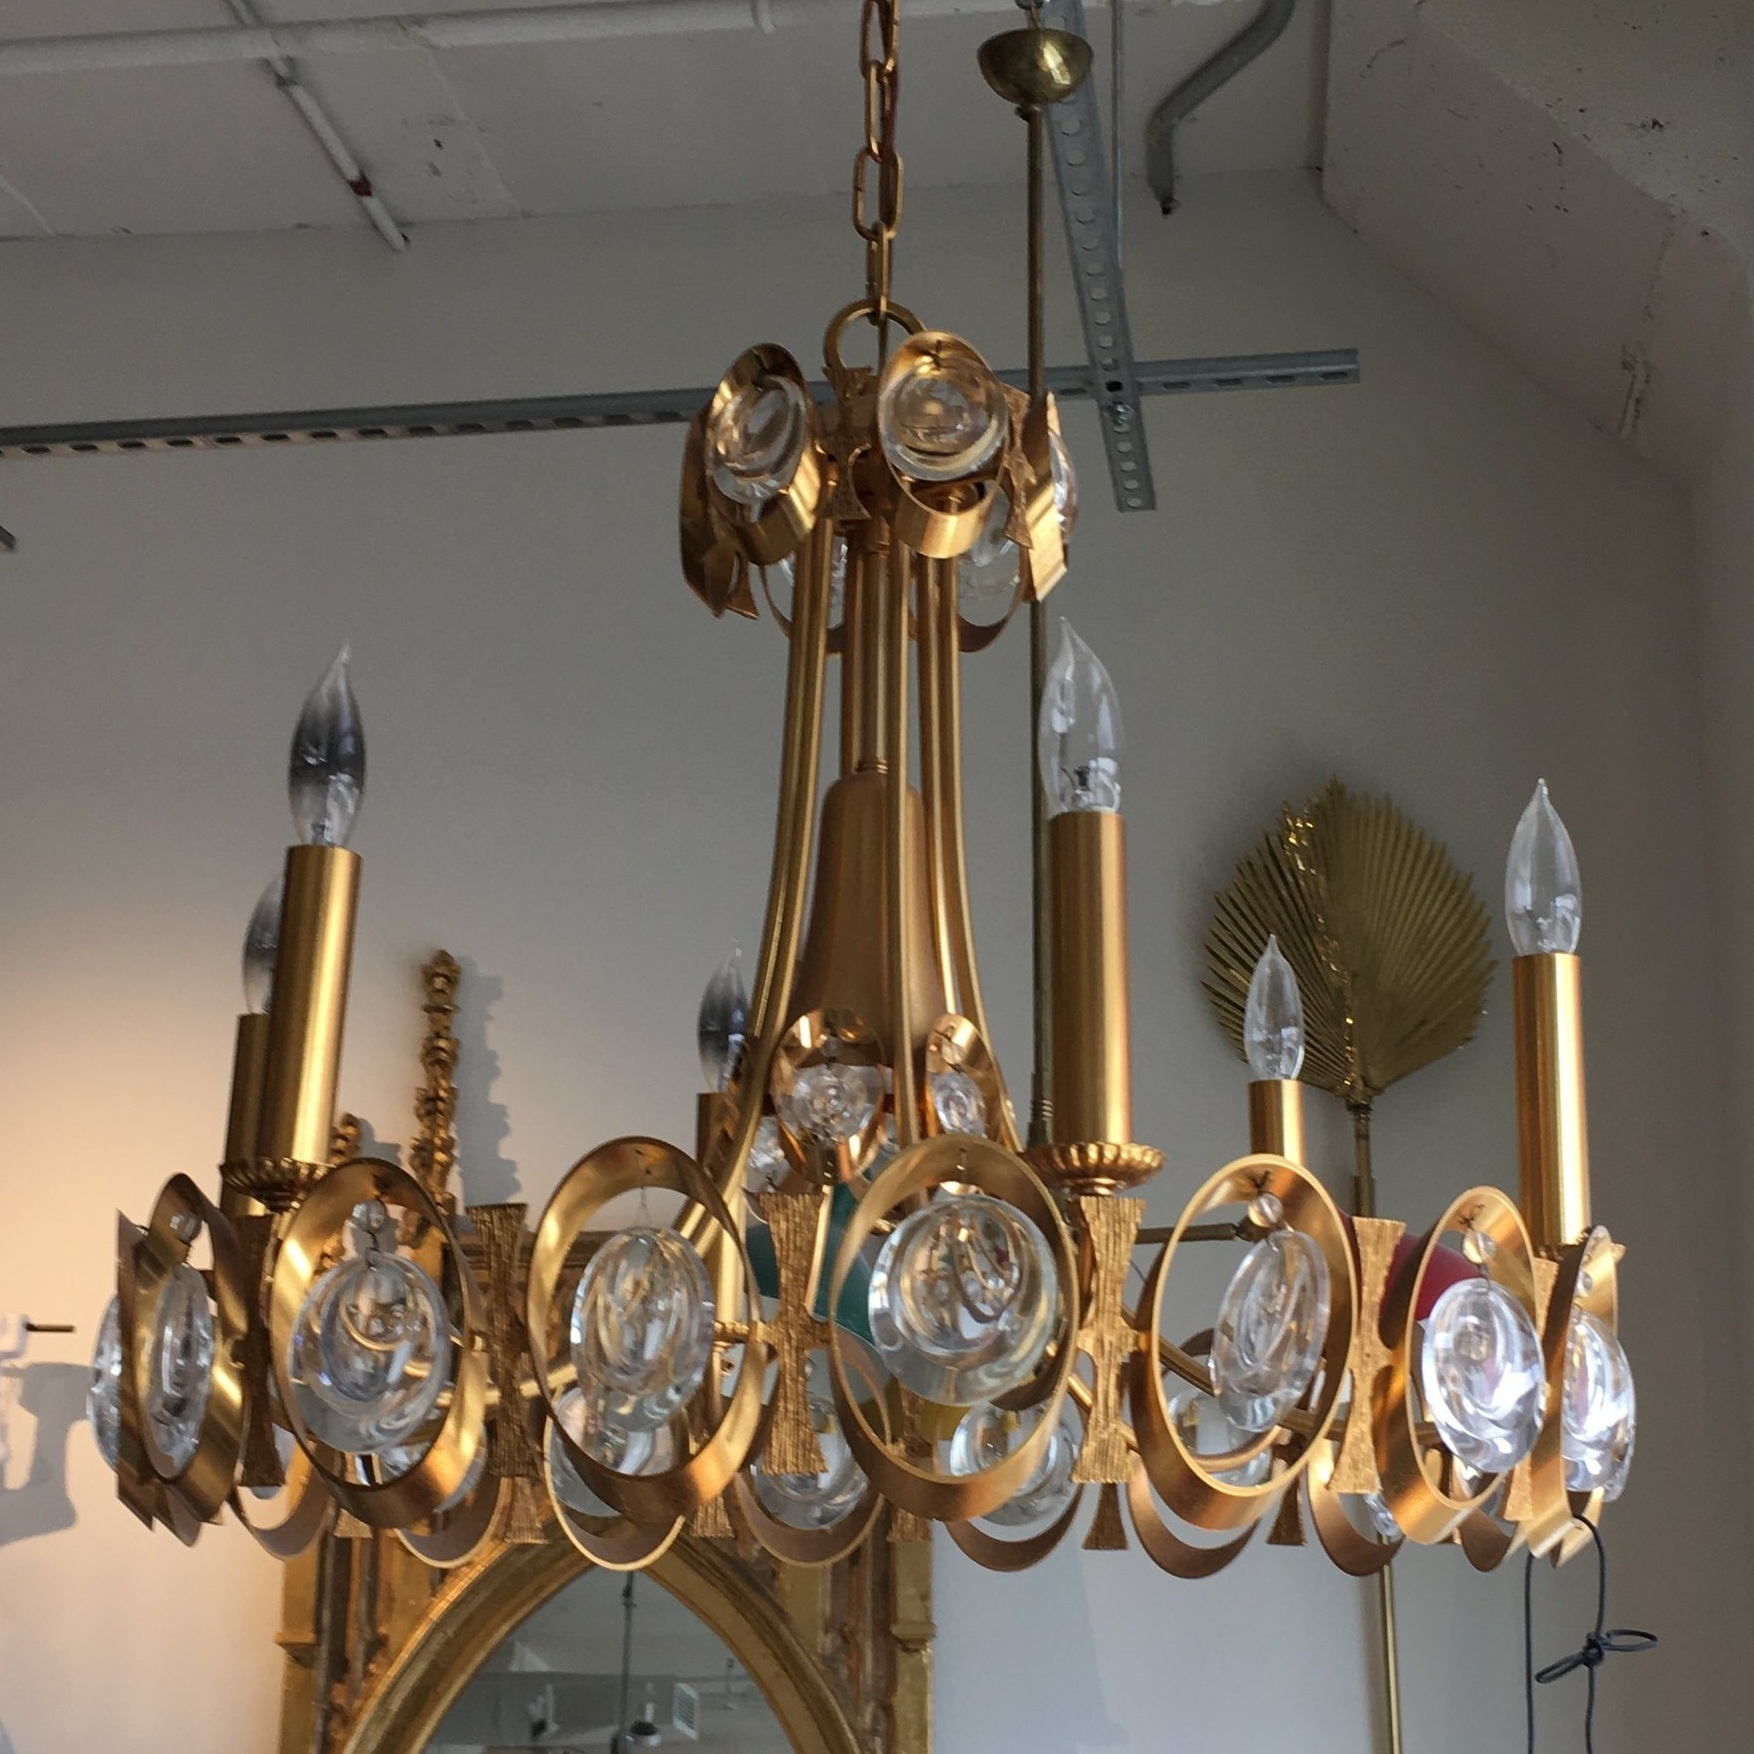 Very cool MCM era chandelier